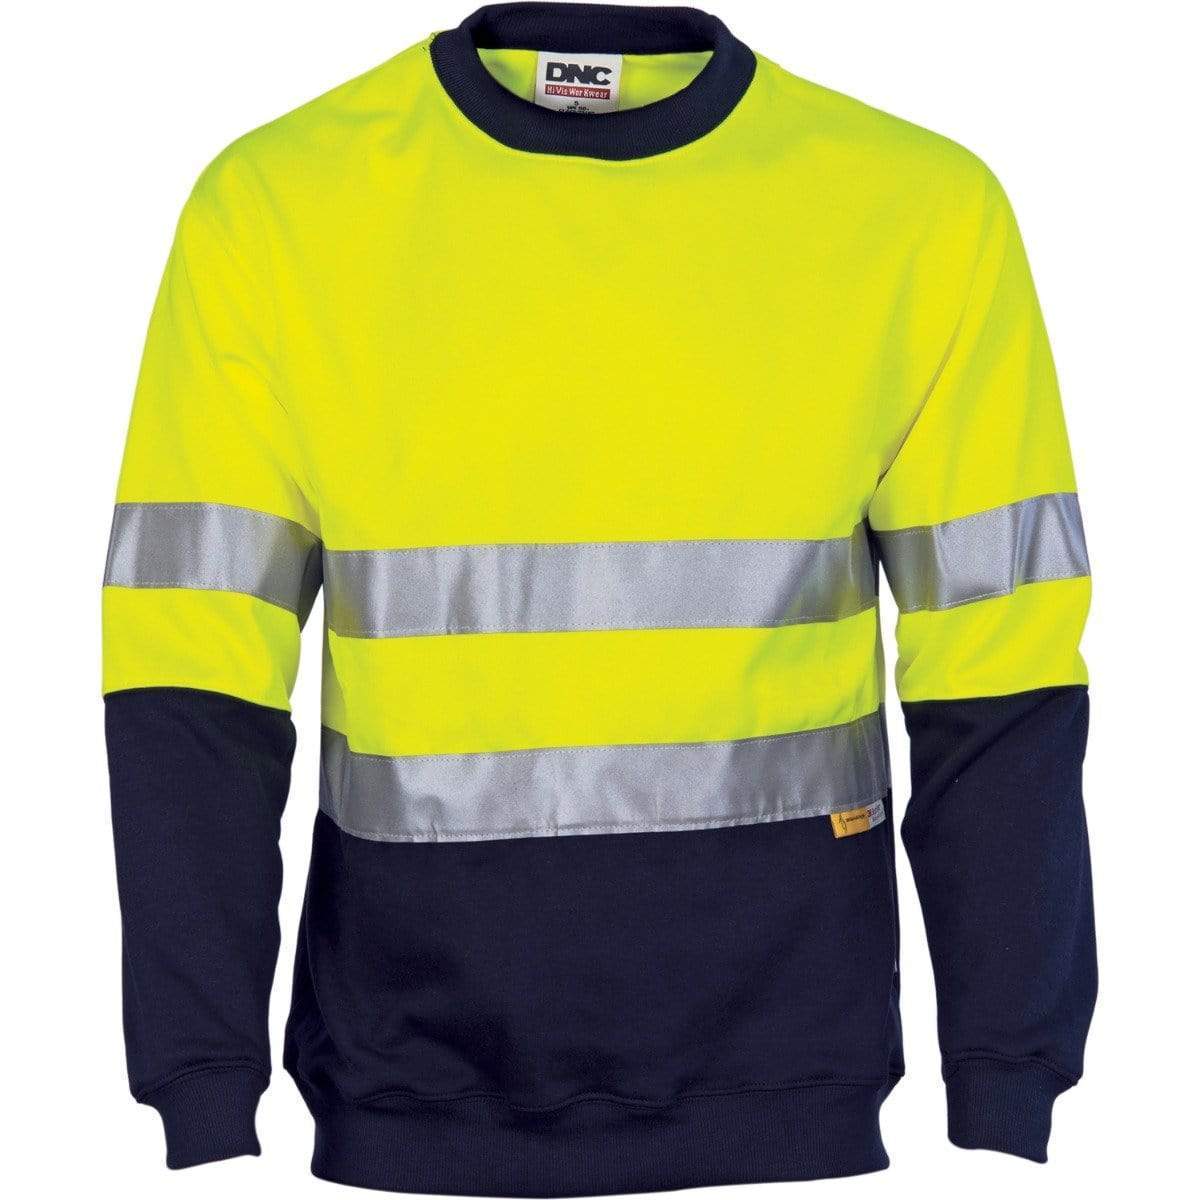 Dnc Workwear Hi-vis Two-tone Fleecy Crew-neck Sweatshirt (Sloppy Joe) With 3m R/tape - 3824 Work Wear DNC Workwear Yellow/Navy 5XL 